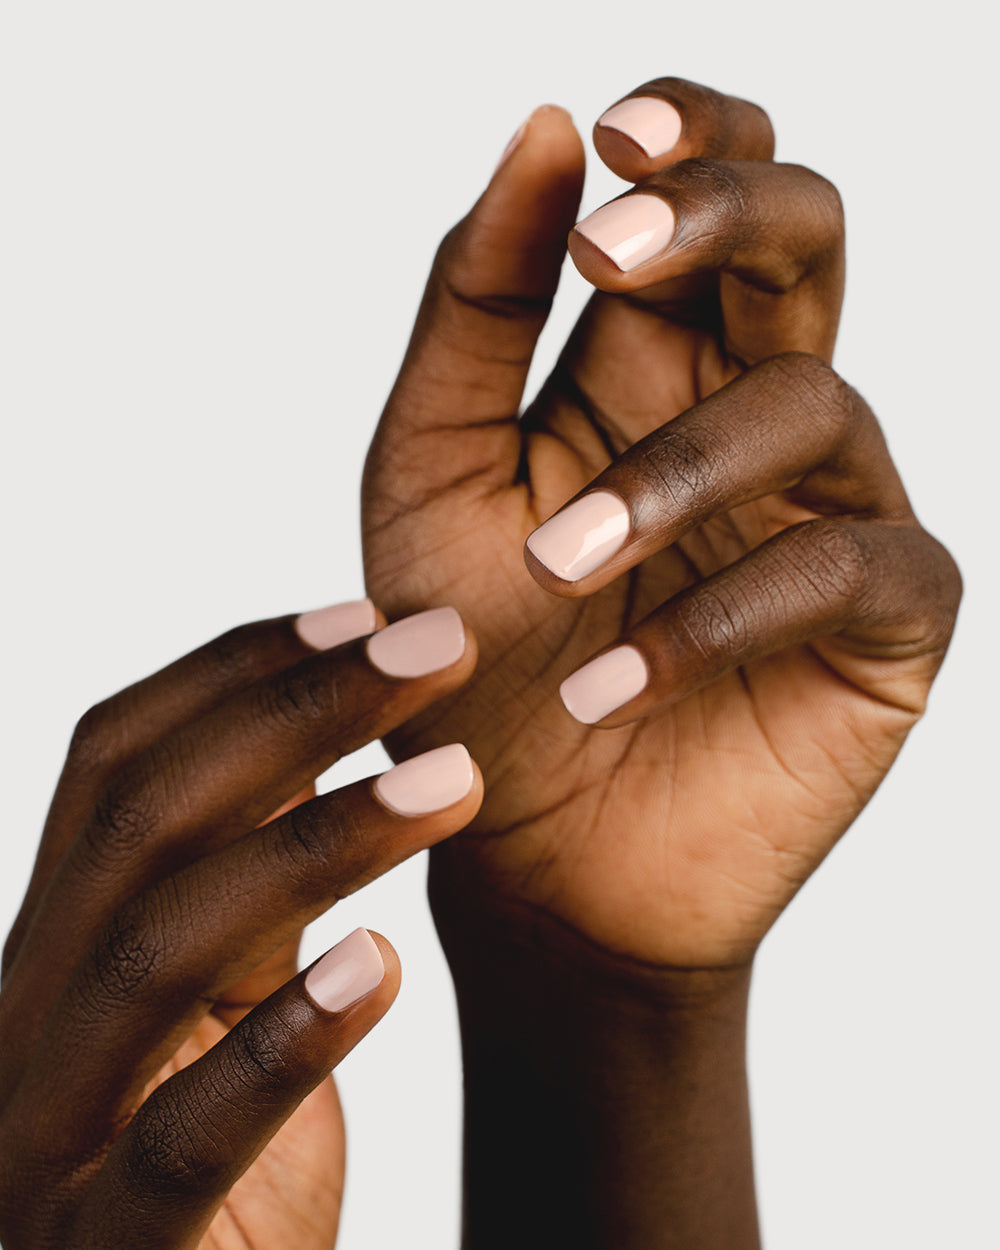 Light champagne pink nail polish hands swatch on dark skin tone